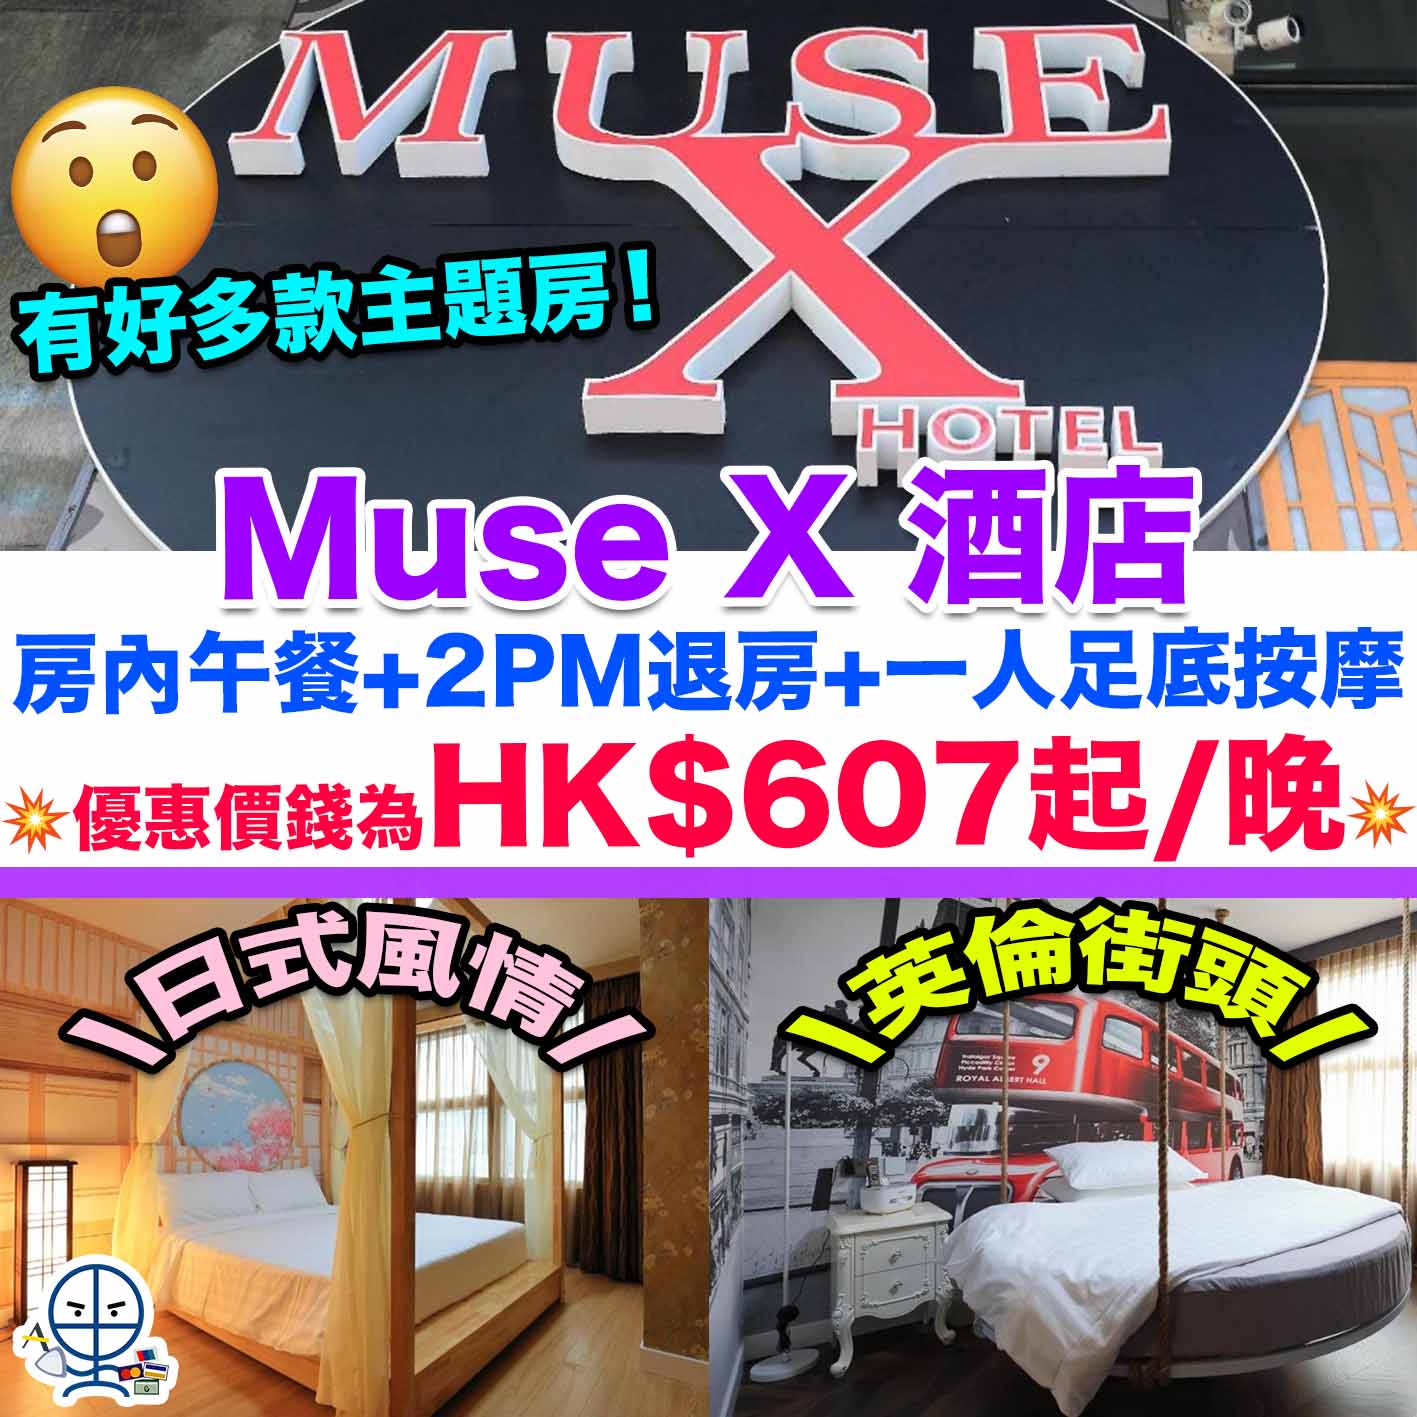 Muse X 酒店優惠-staycation-灣仔酒店staycation